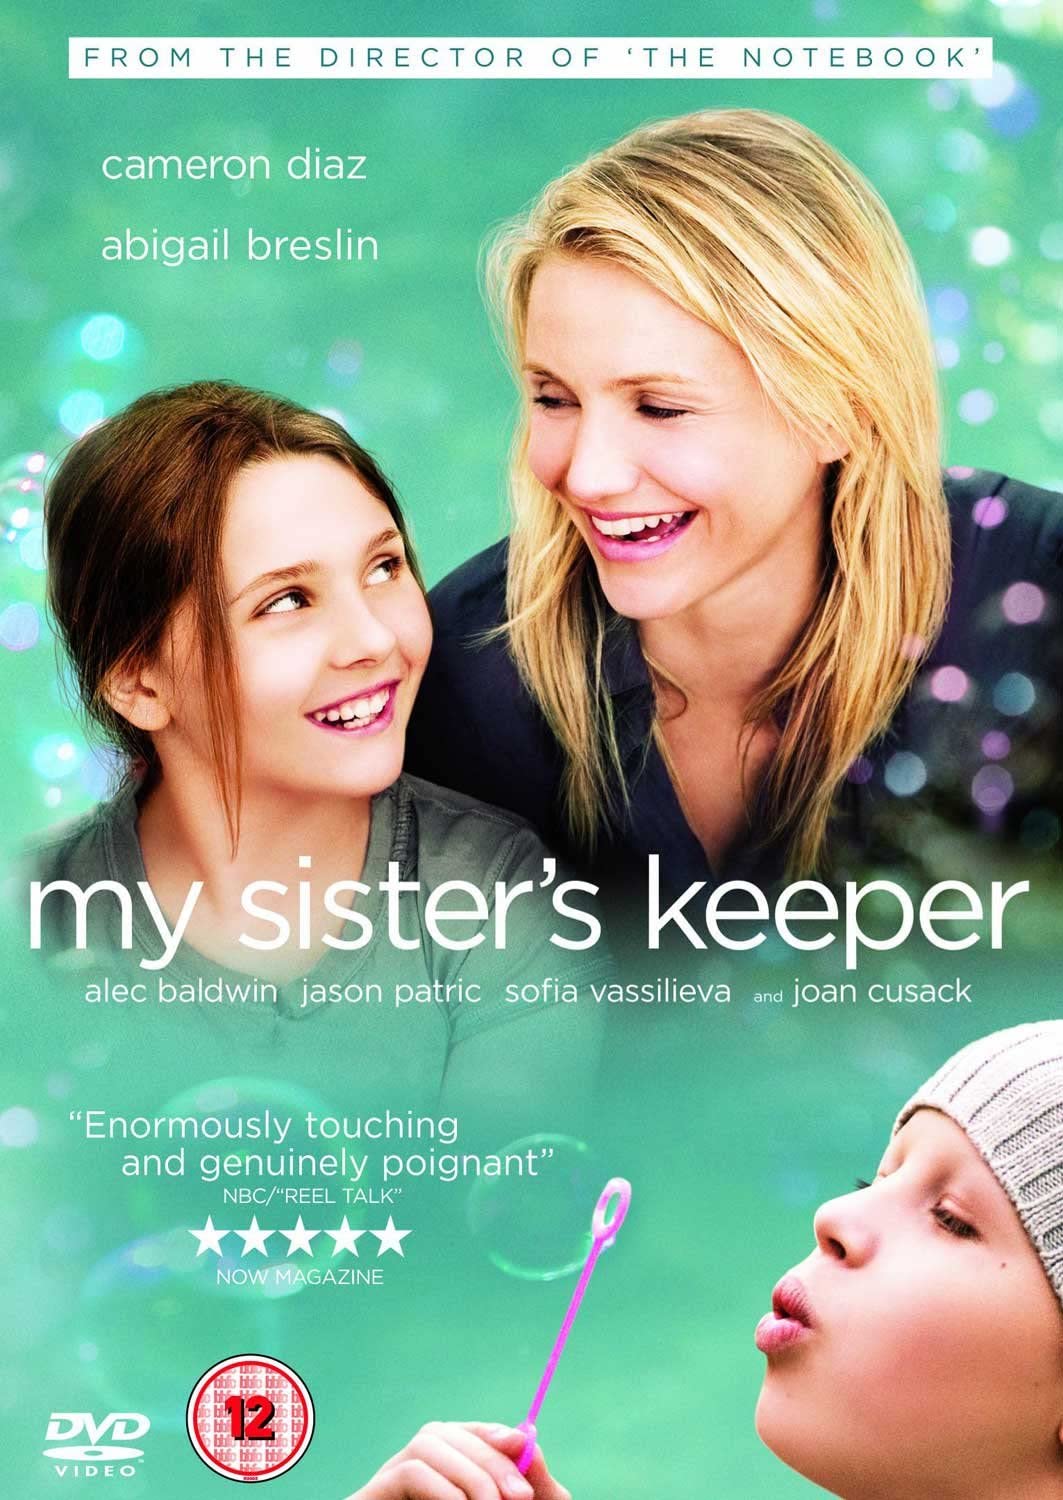 My Sister's Keeper - Drama [DVD]